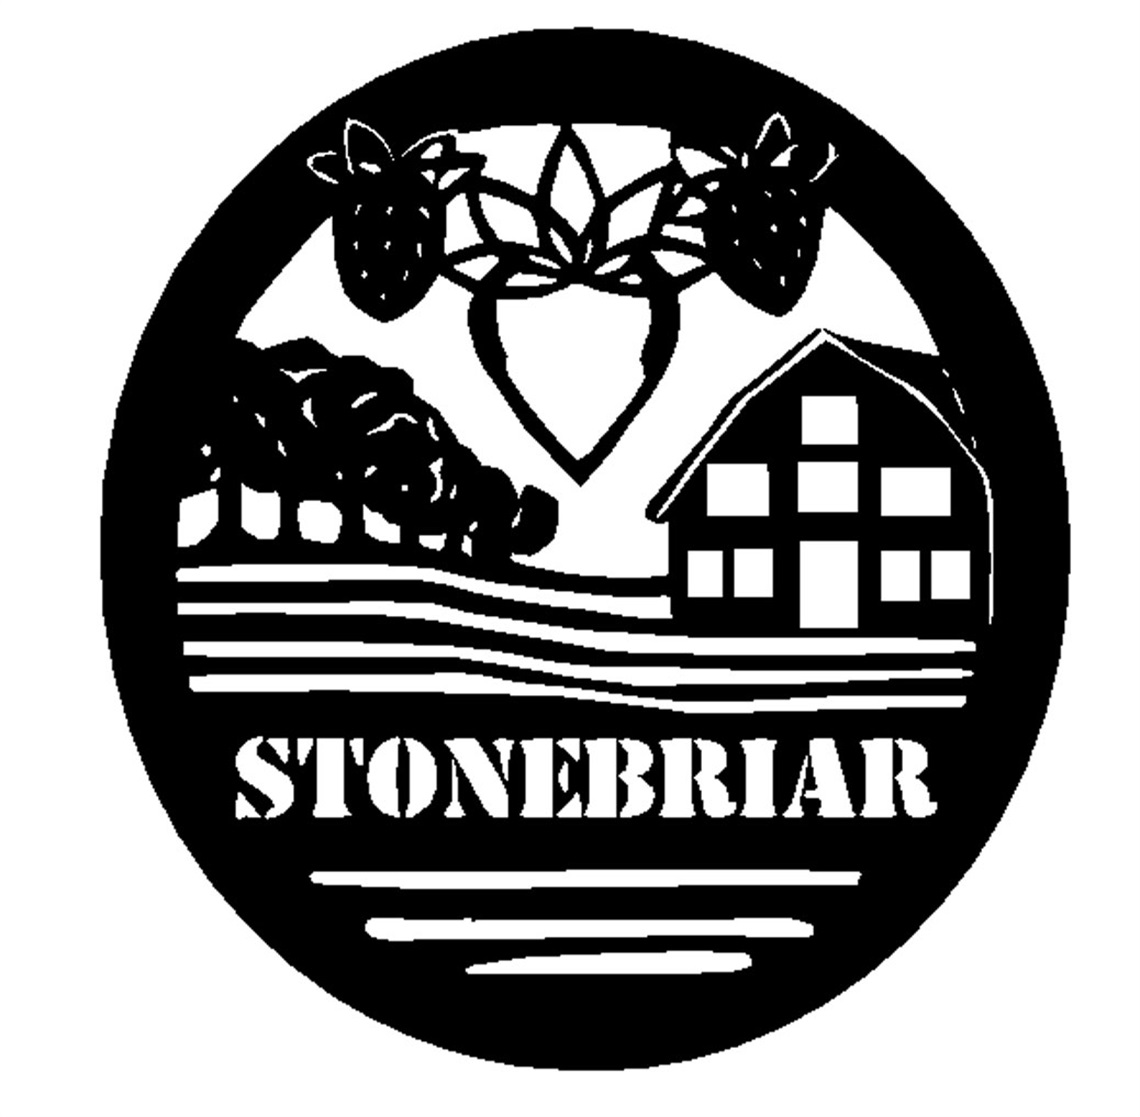 StoneBriar Farm logo